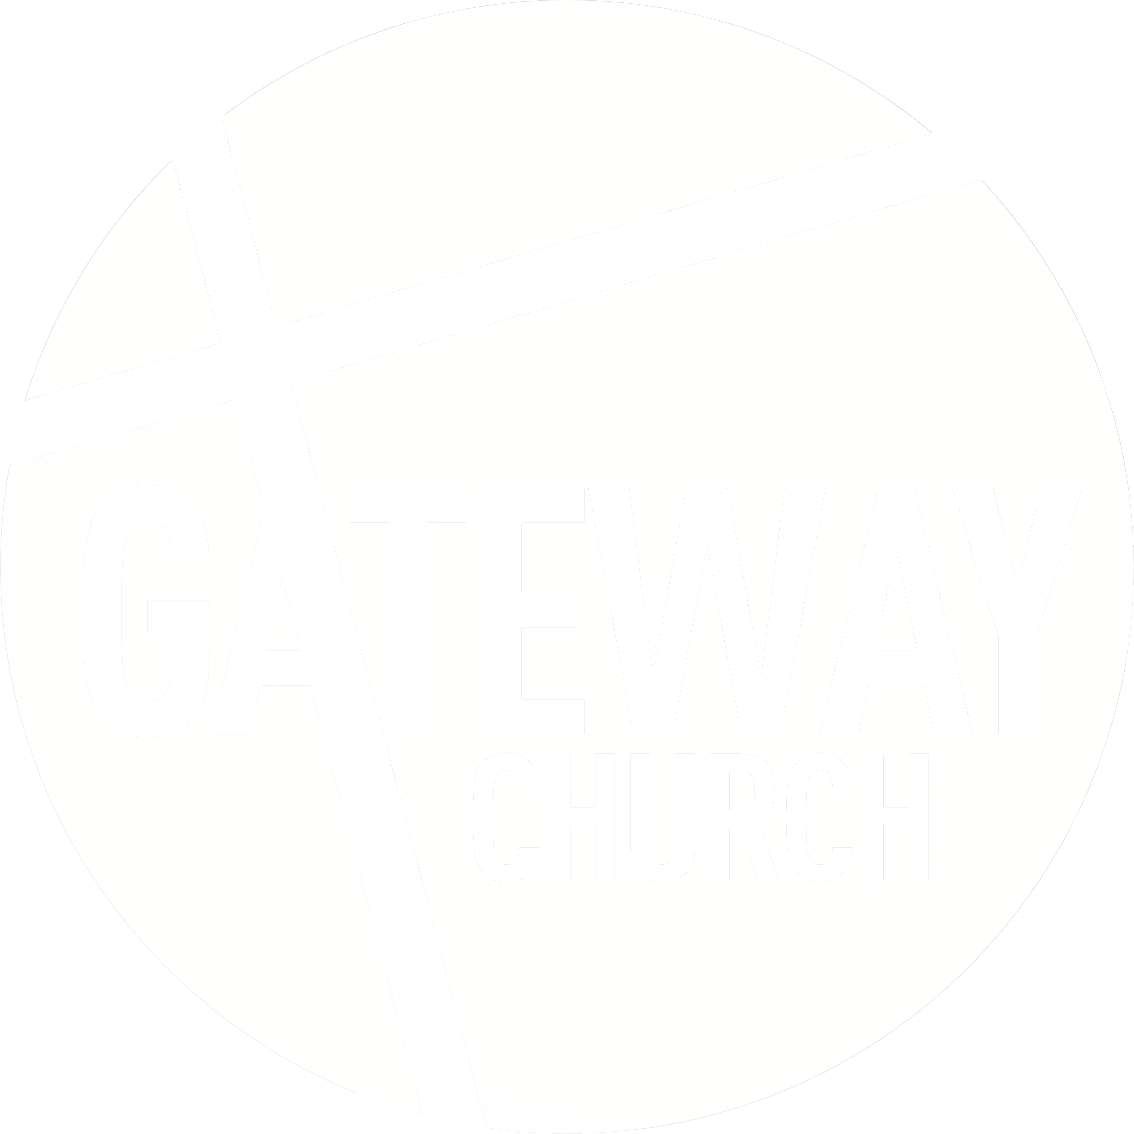 Gateway Church 